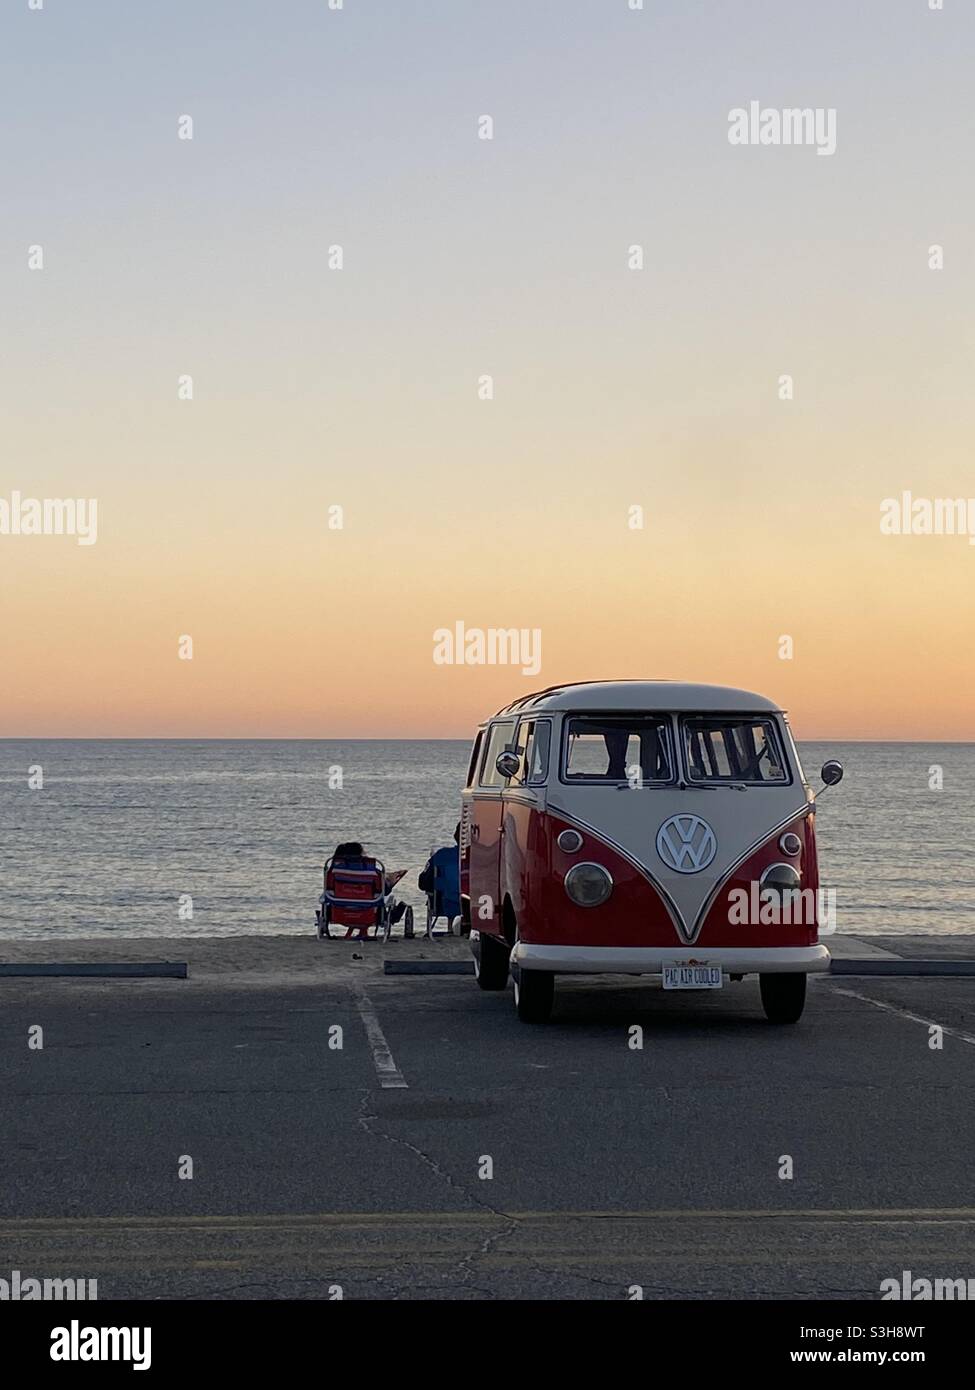 Puesta de sol del autobús VW rojo Foto de stock